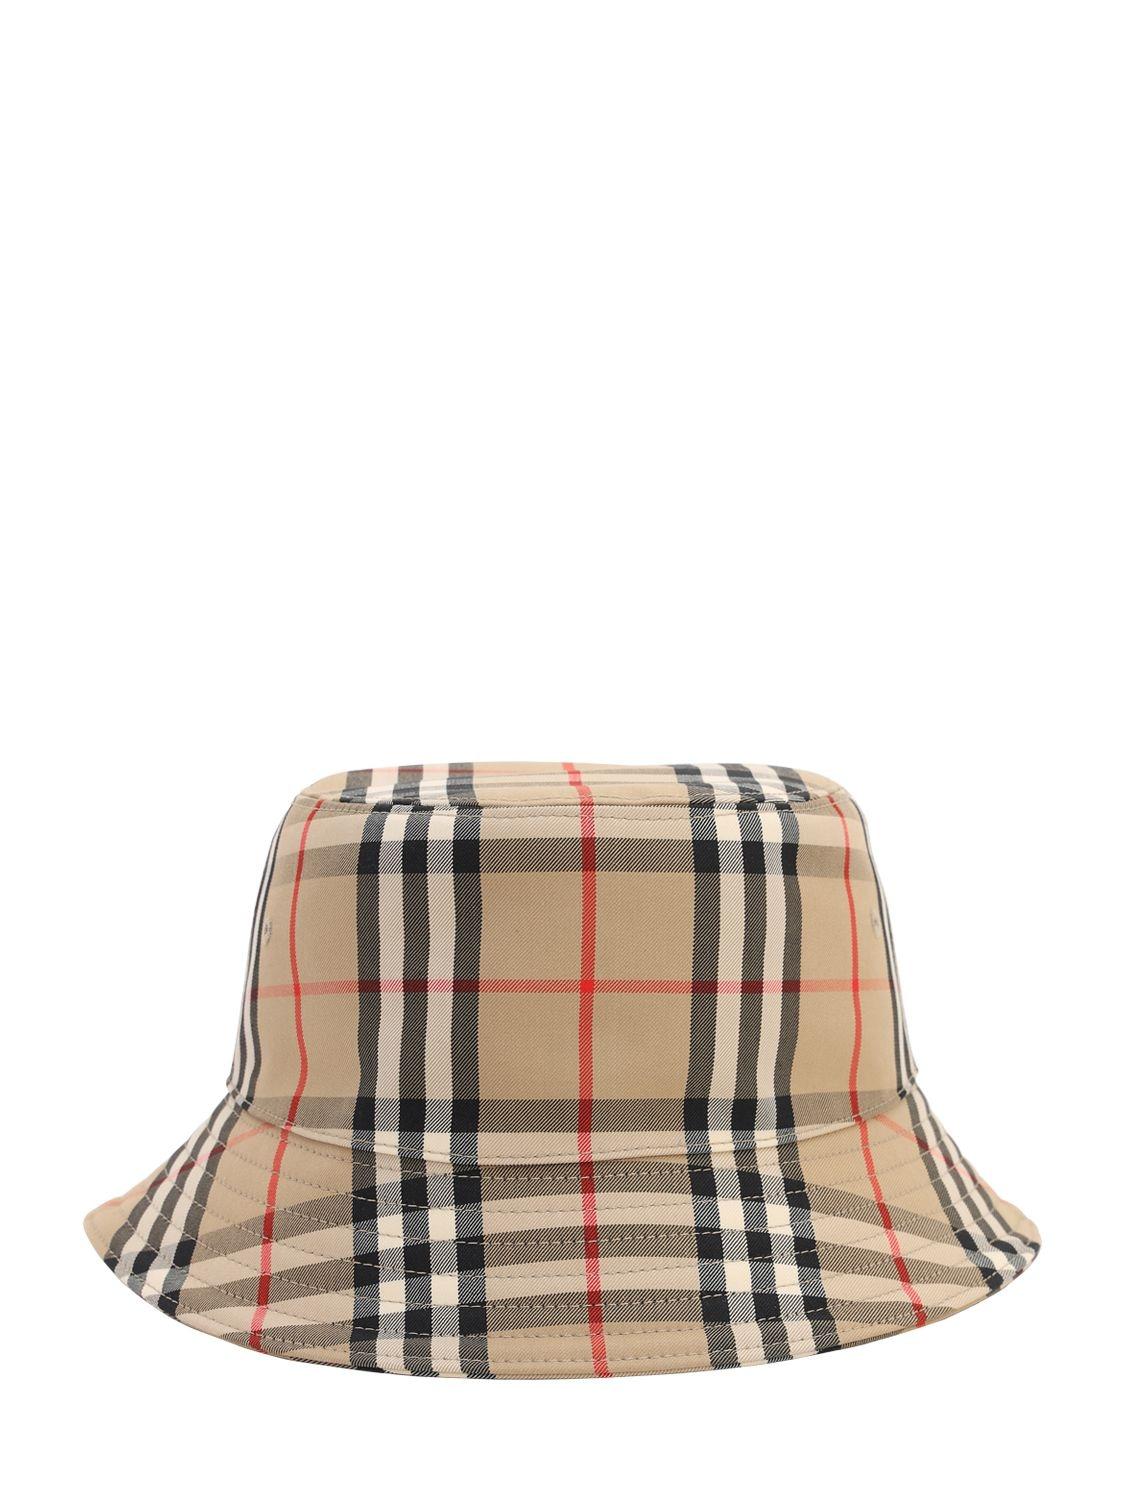 Burberry Vintage Check Cotton Blend Bucket Hat for Men - Save 36% | Lyst